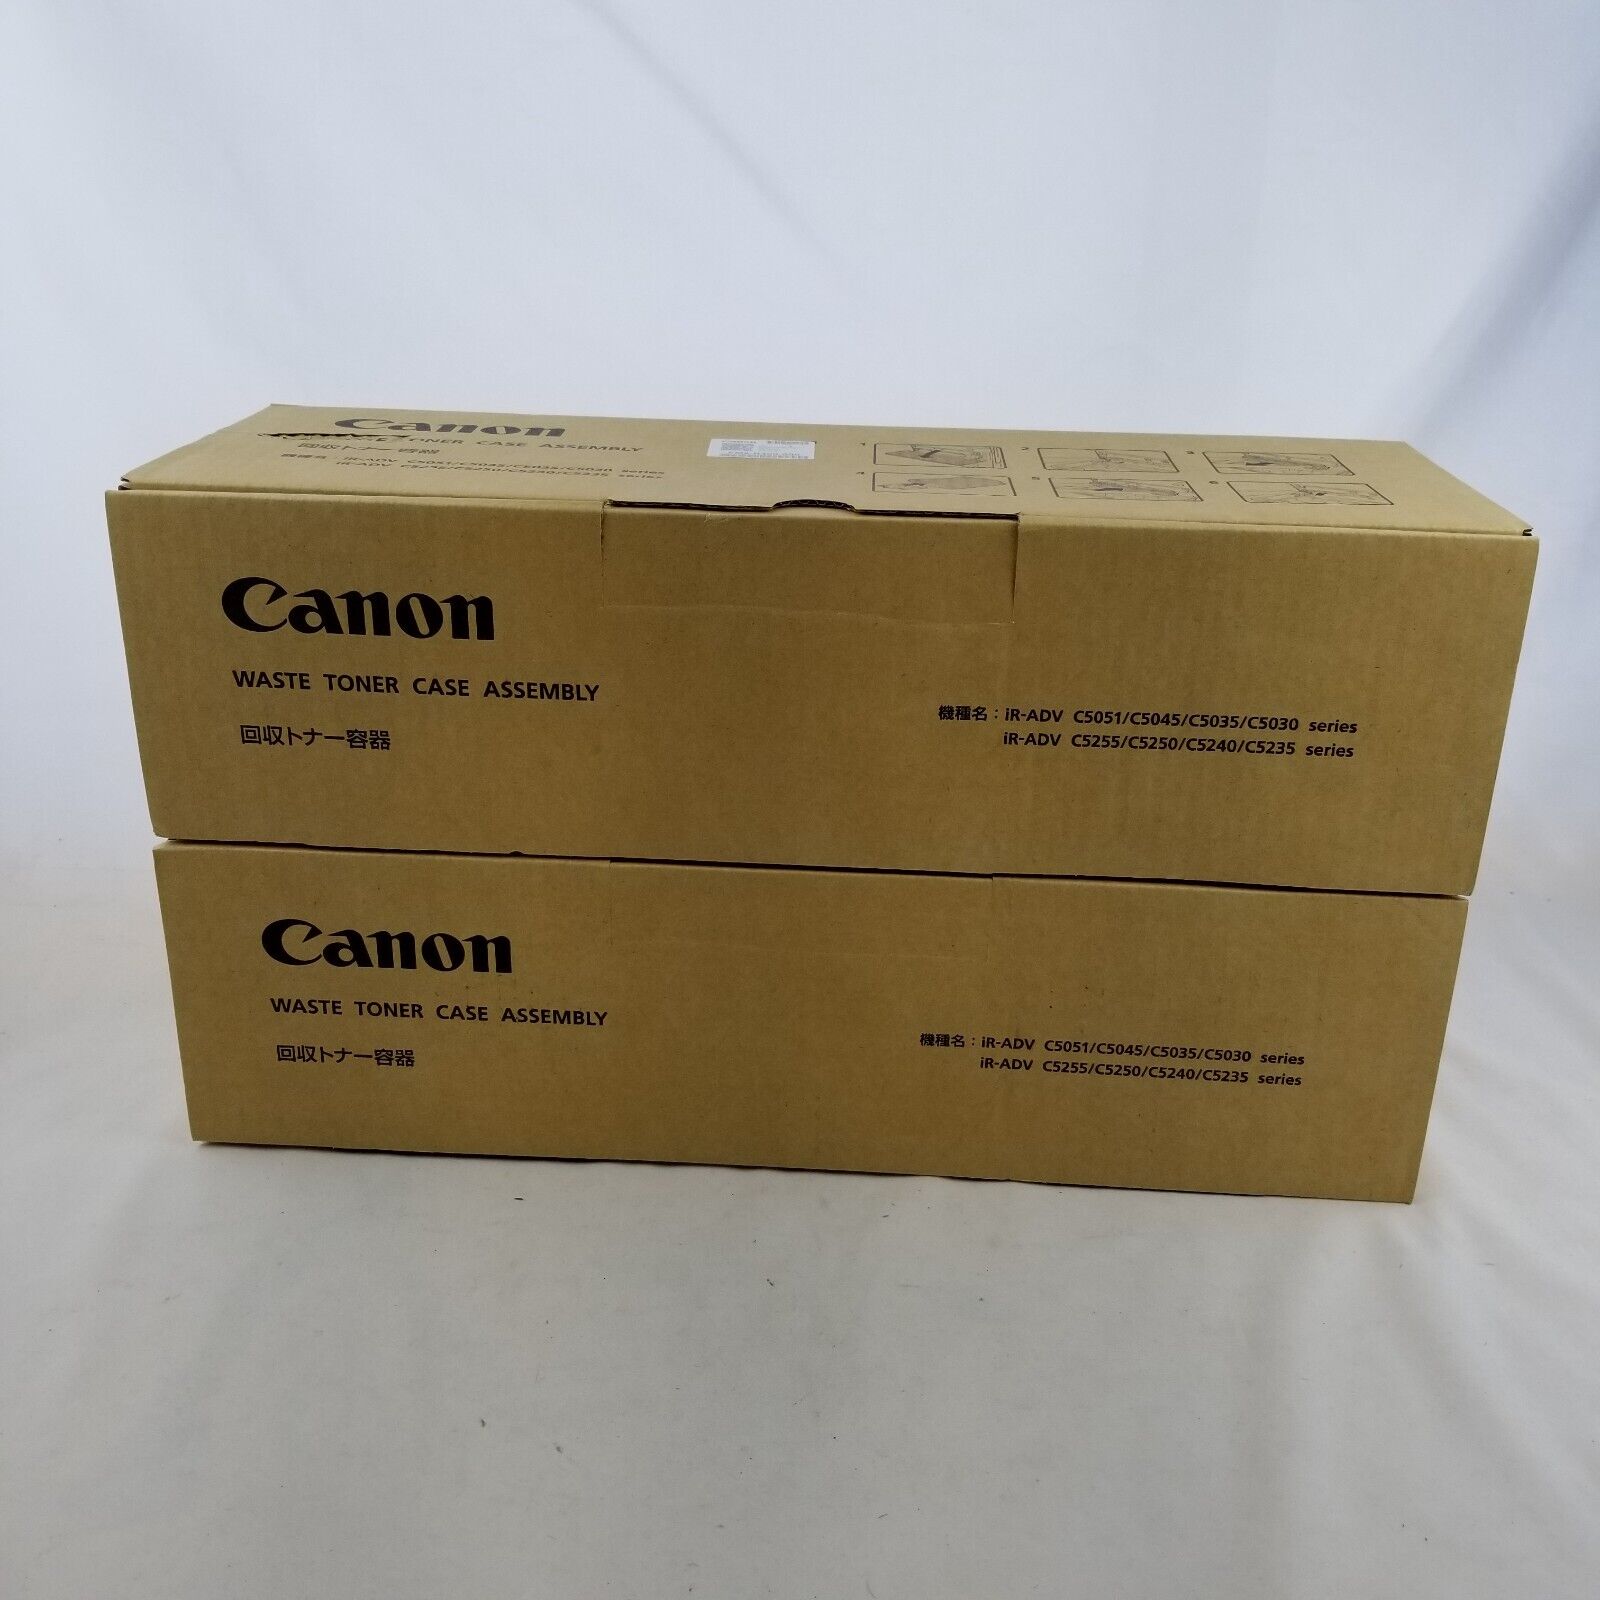 Lot of 2 Genuine Canon ImageRunner Advance C5051, C5045 Waste Toner FM2-R400-000